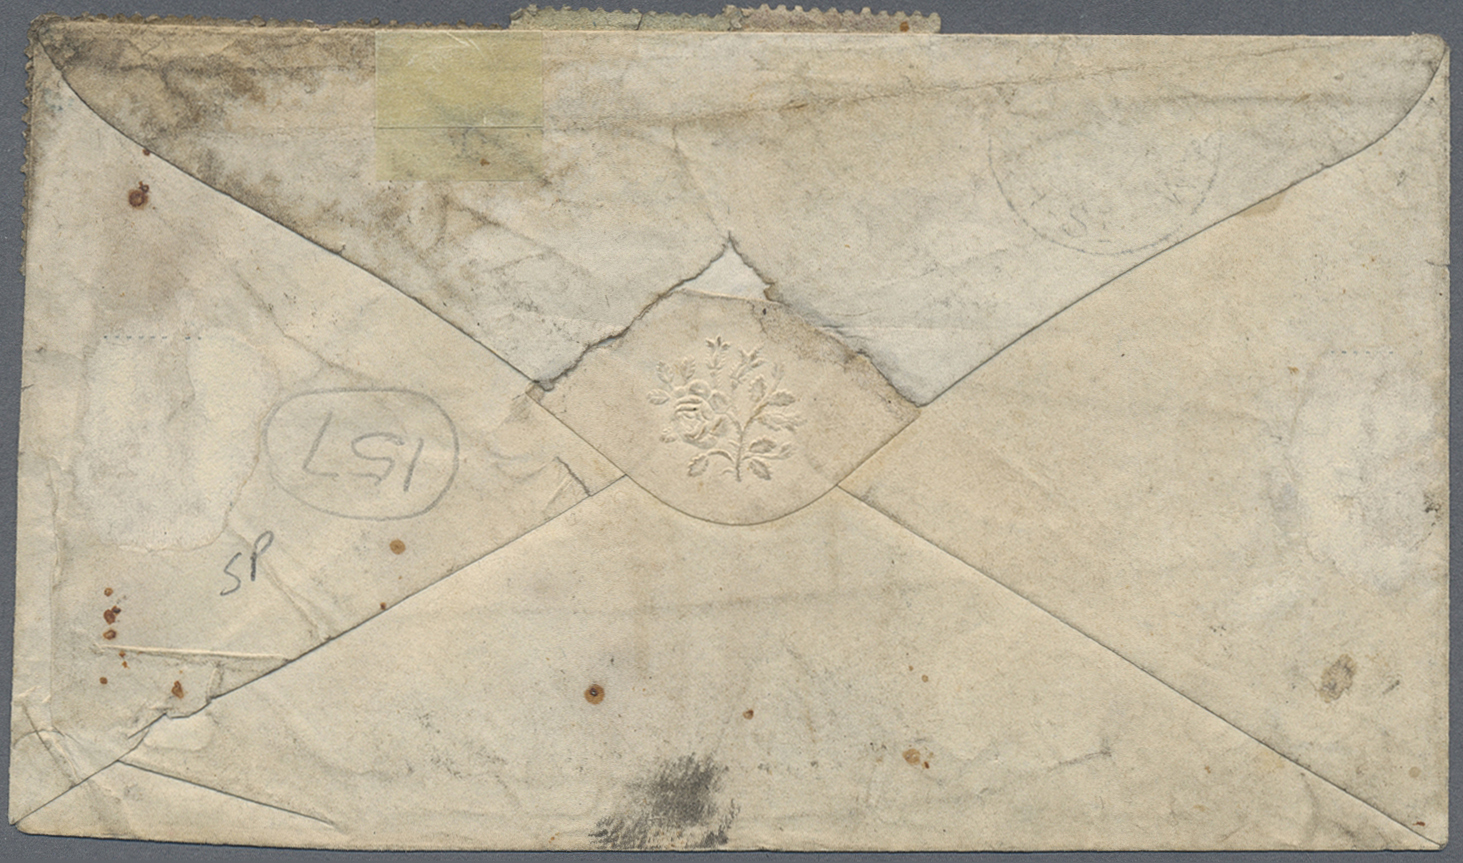 Br Großbritannien: 1859/1873, Mail To American West Coast, Two Covers To Victoria/Vancouver Island Resp. San Fran - Autres & Non Classés